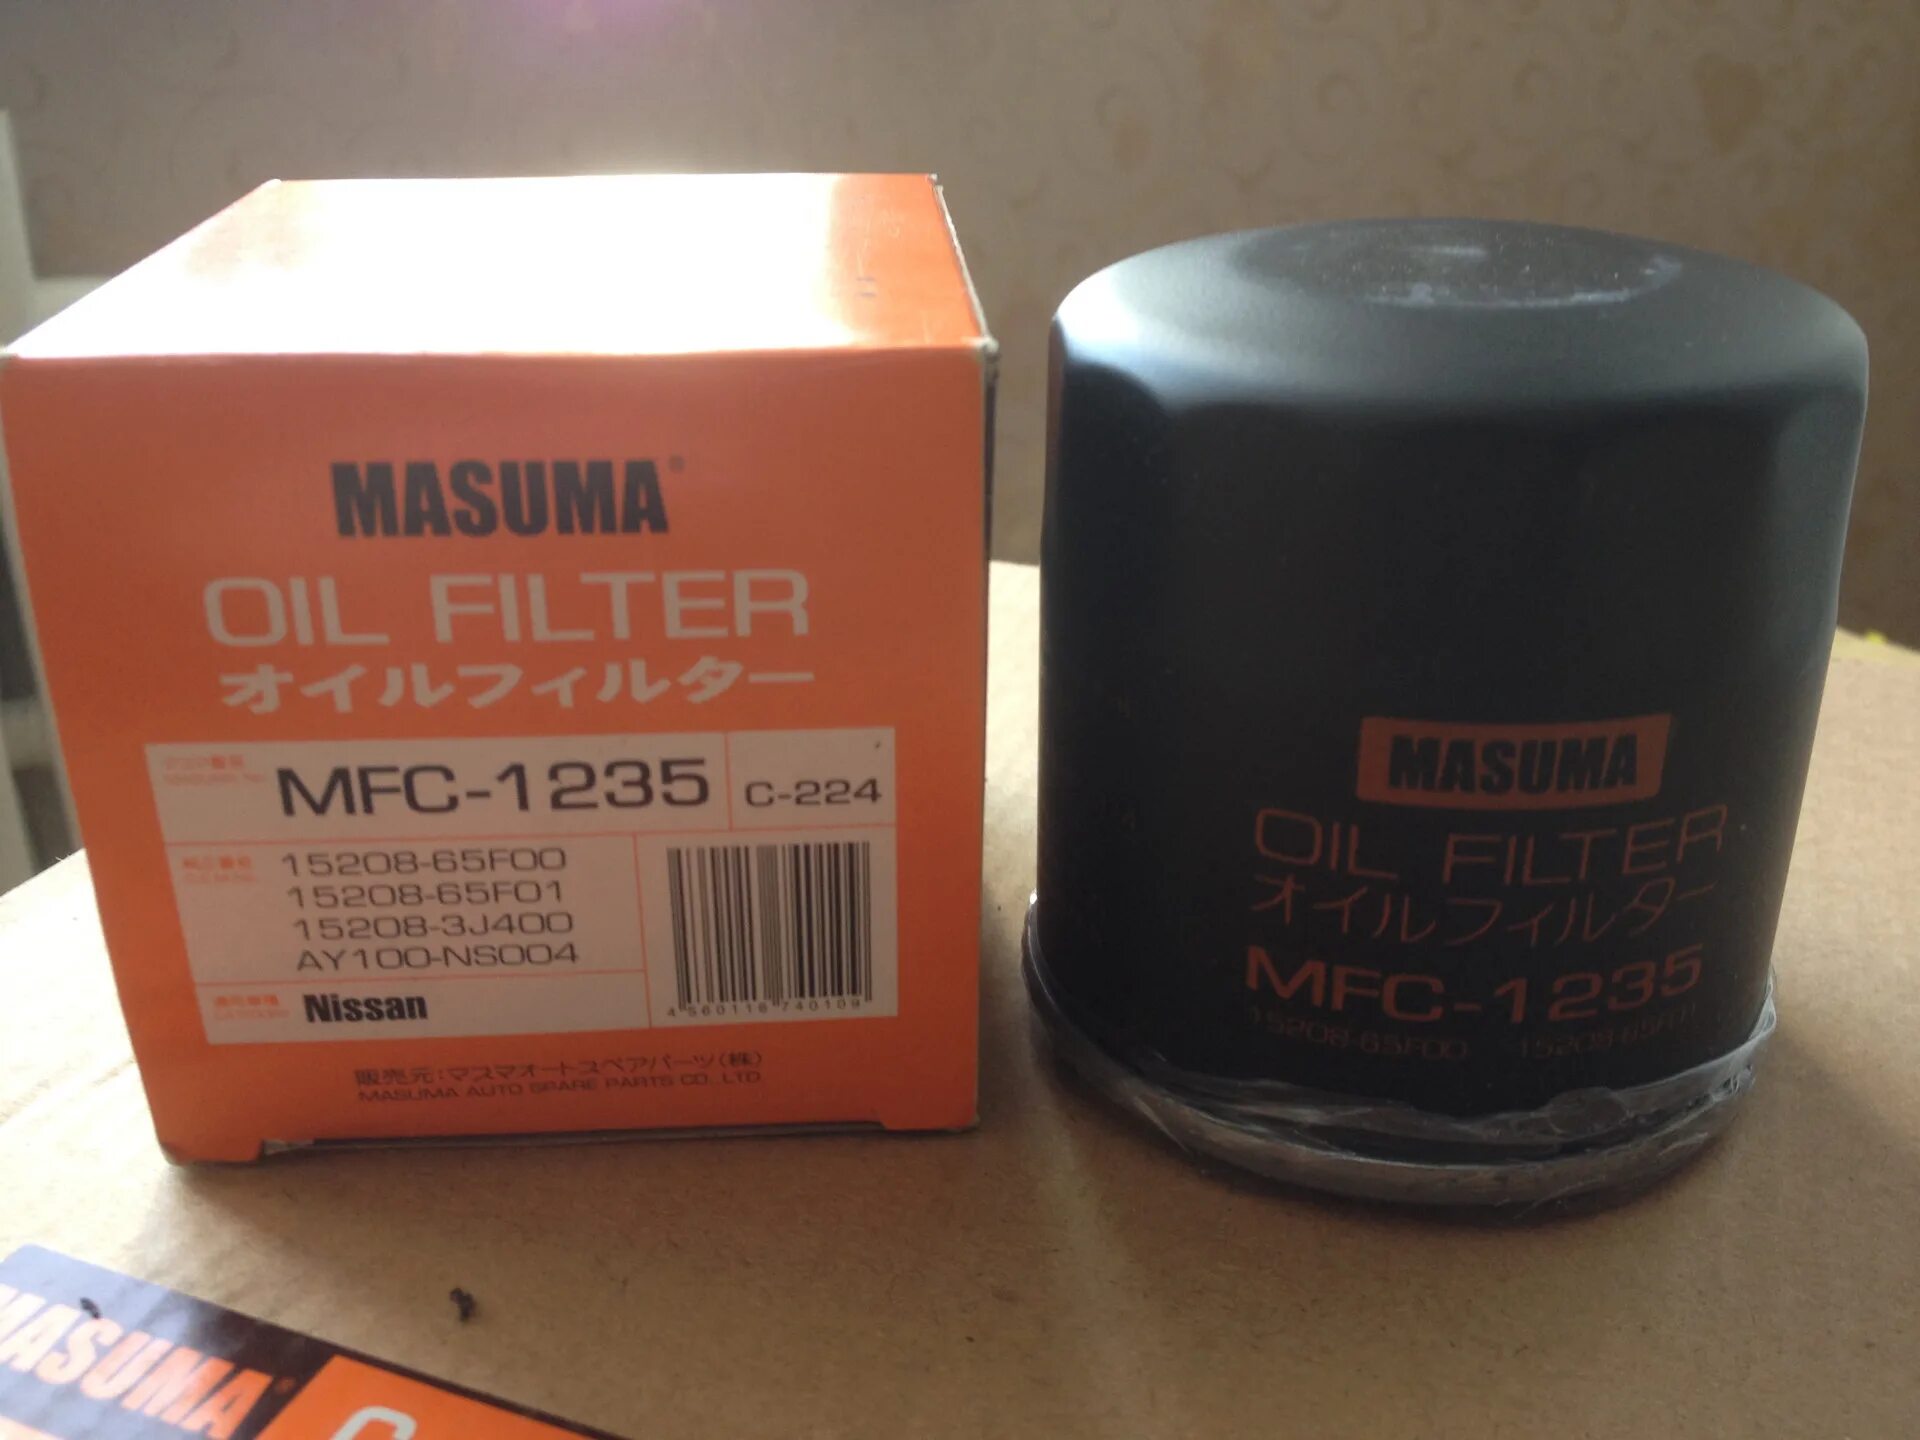 Masuma mfc1235 фильтр масляный. MFC-1235 Masuma. Масляный фильтр Renault Masuma mfc1235. Masuma mfc1318 фильтр масляный. Масло ниссан вингроад